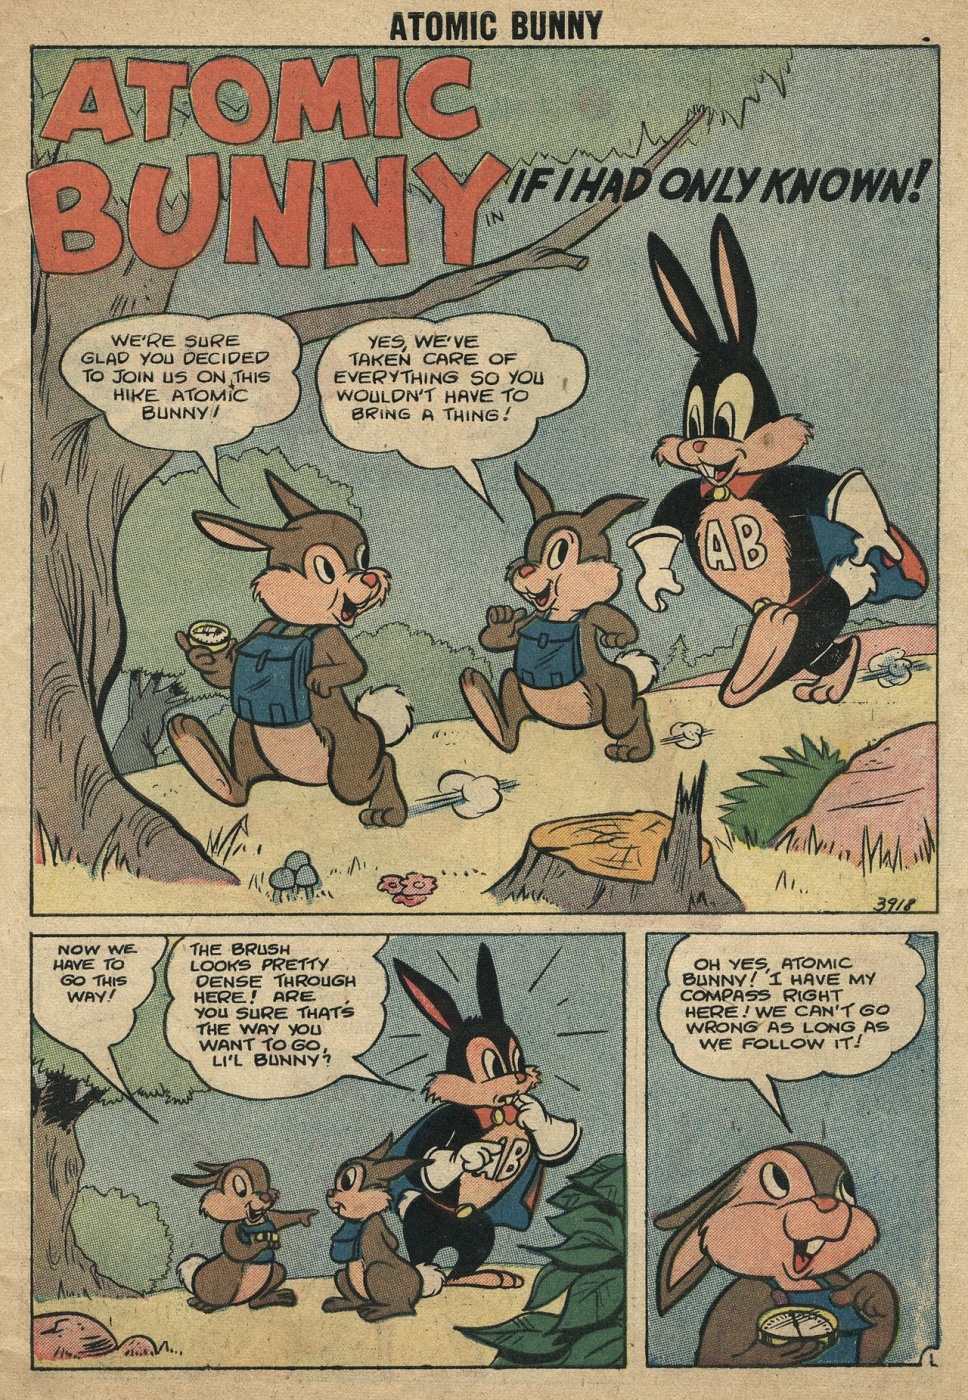 Atomic-Bunny-Comic-Strips (3)